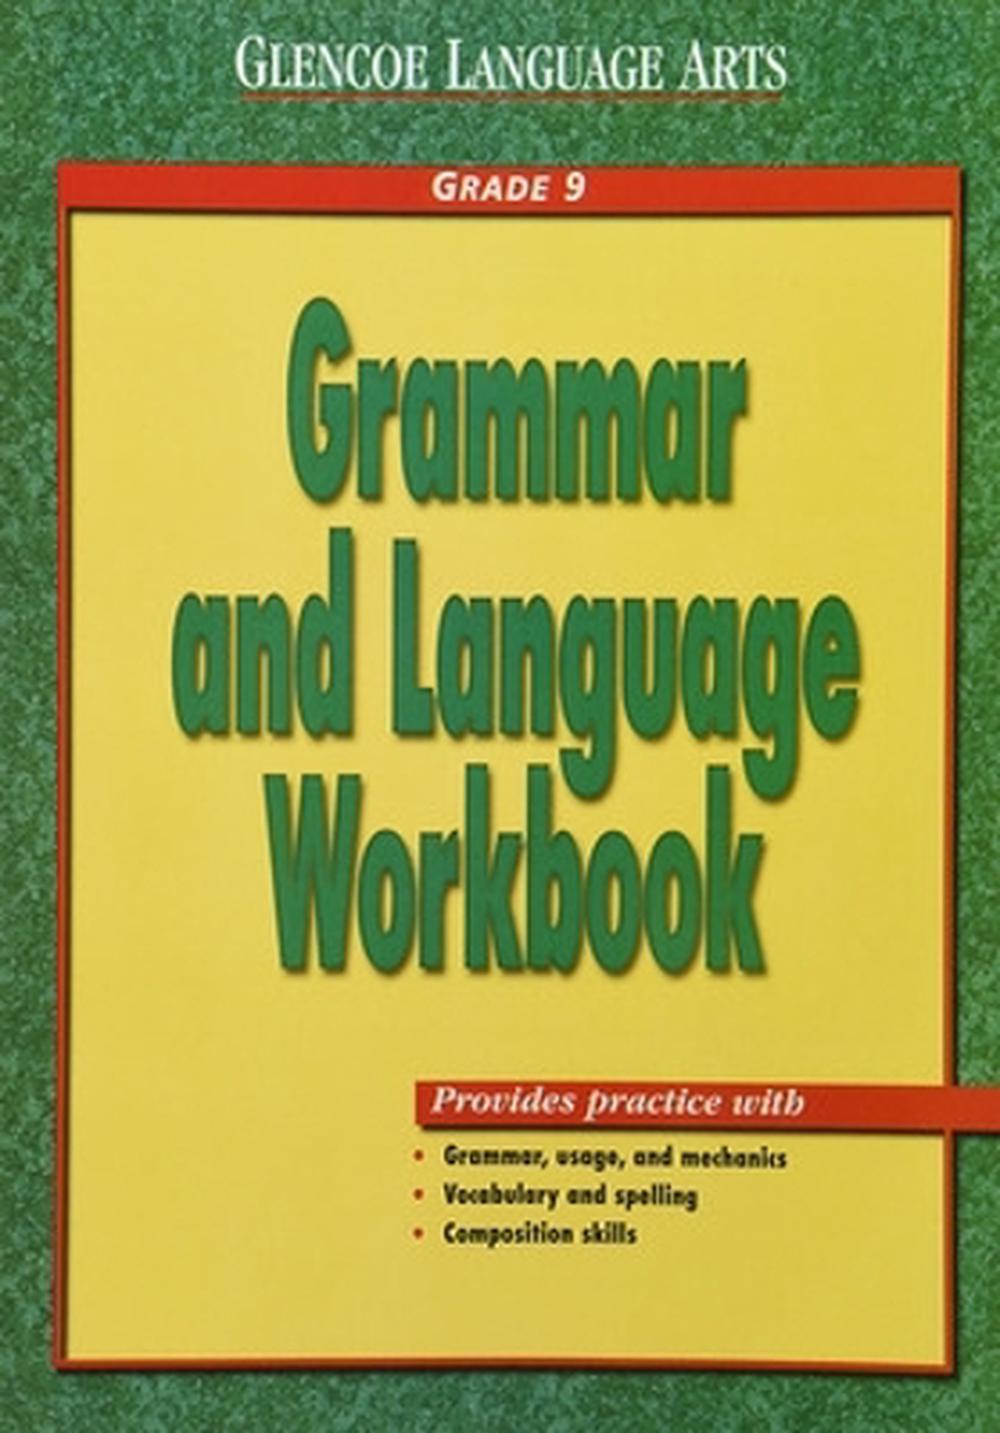 Glencoe Language Arts Grammar and Language Workbook Grade 9 by GLENCOE, Paperback, 9780028182940